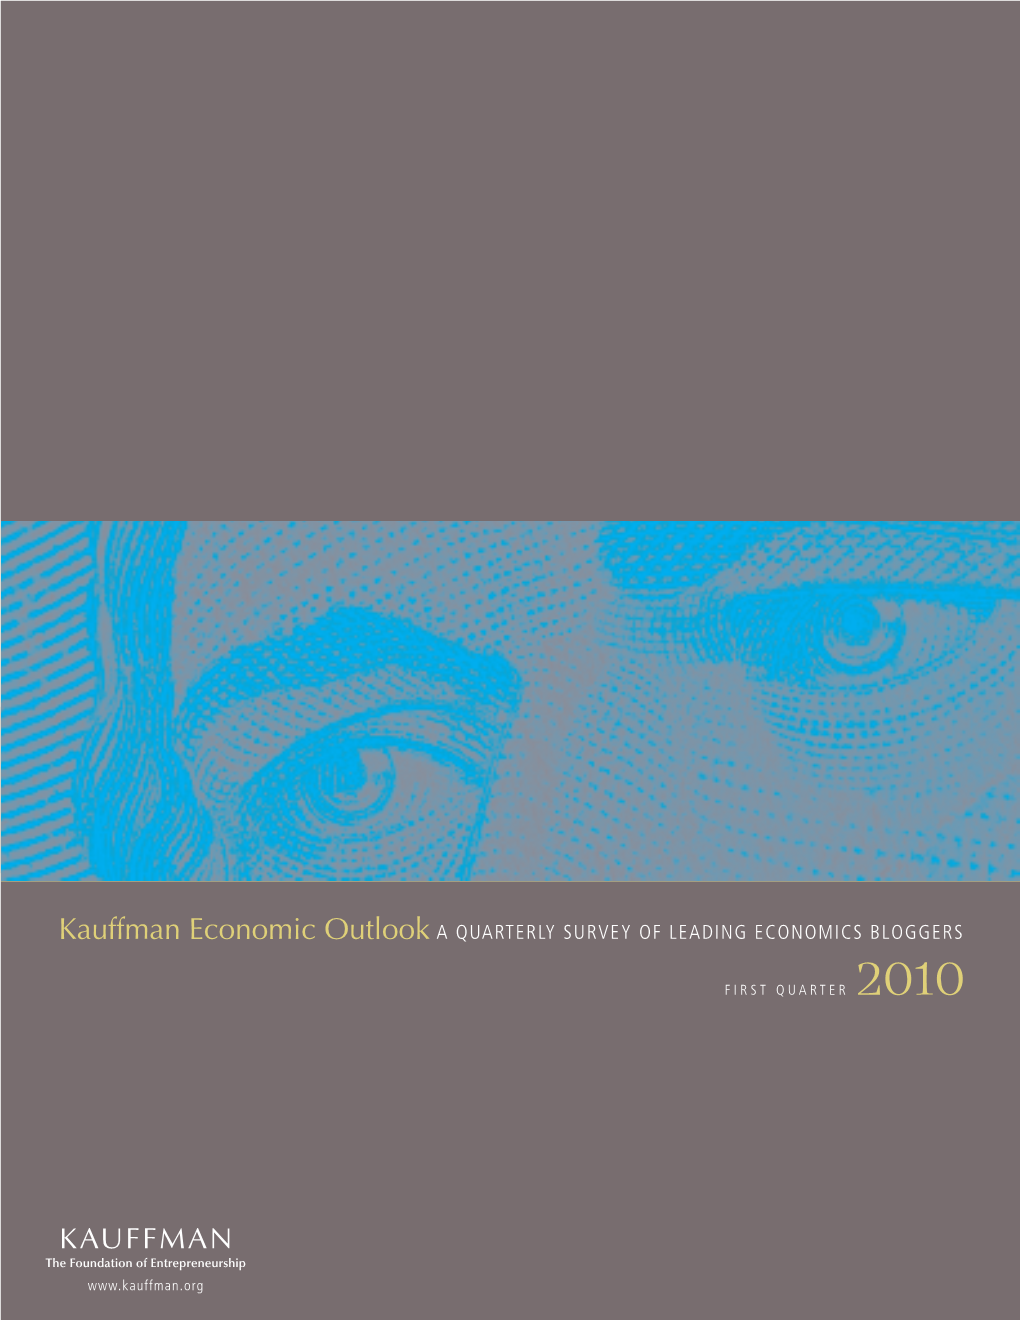 Kauffman Economic Outlook a Quarterly Survey of Leading Economics Bloggers